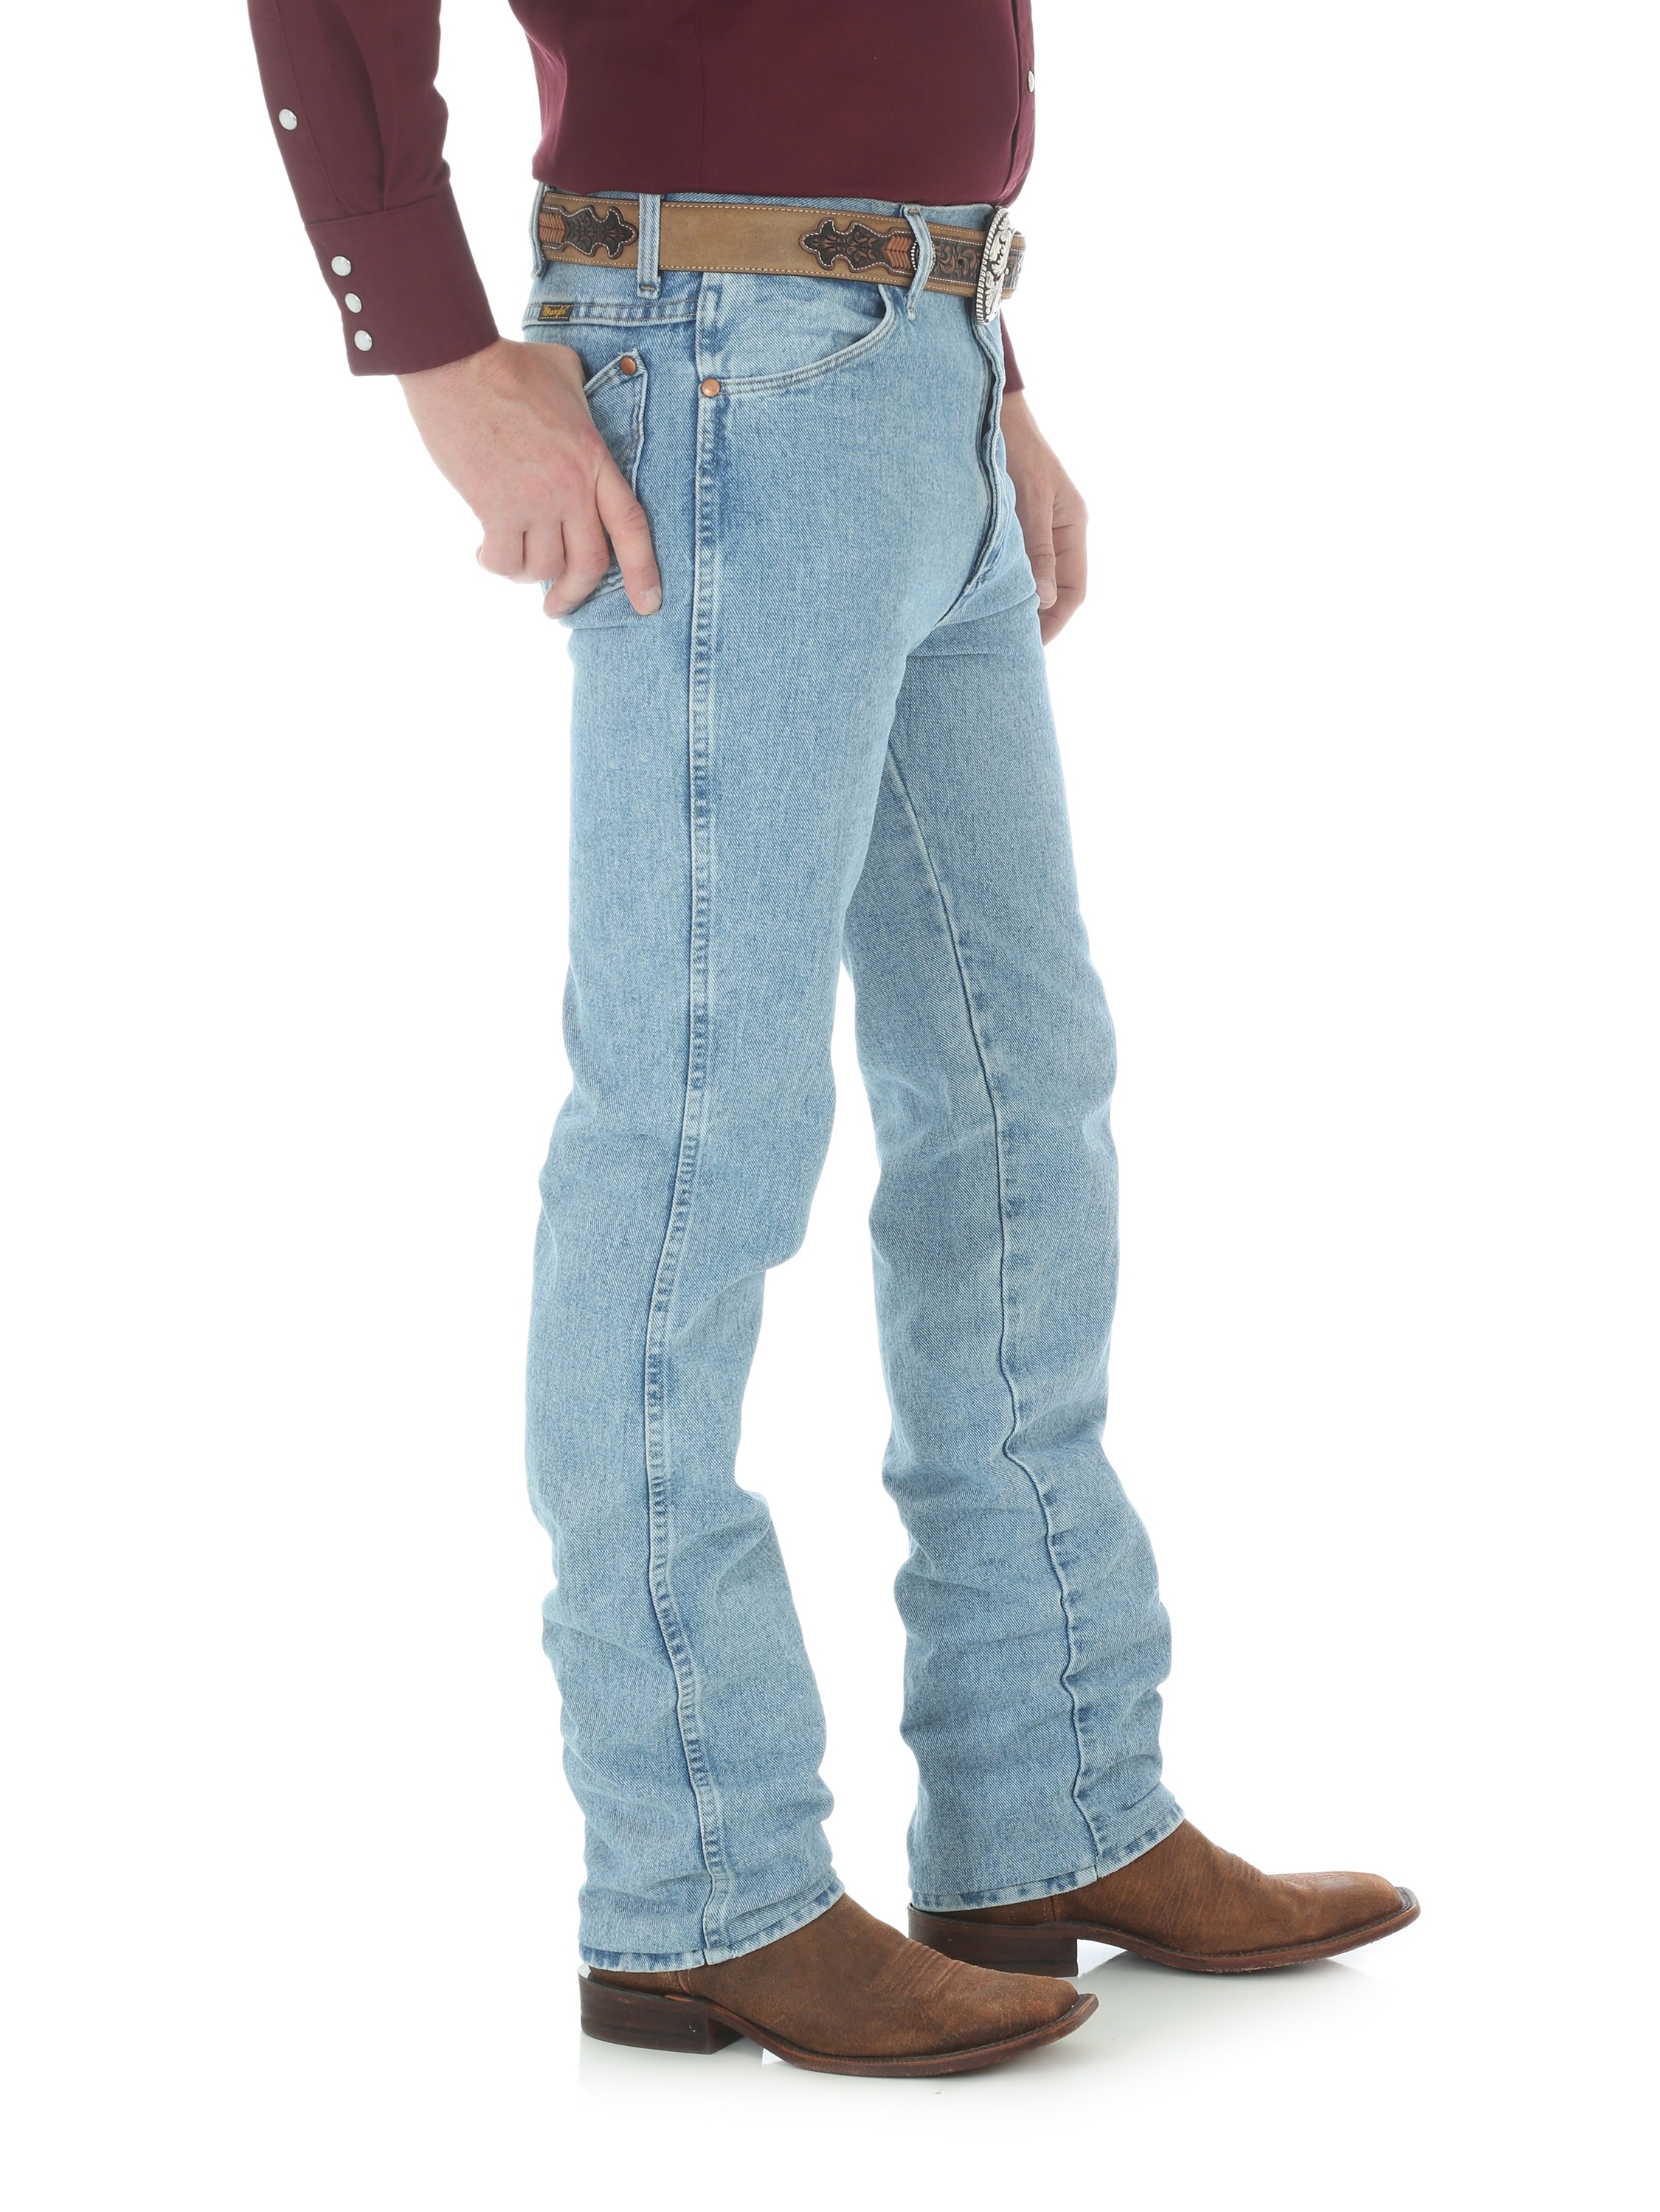 Wrangler Men's Western Cowboy Cut Slim Fit Jean - Antique Wash - image 2 of 3